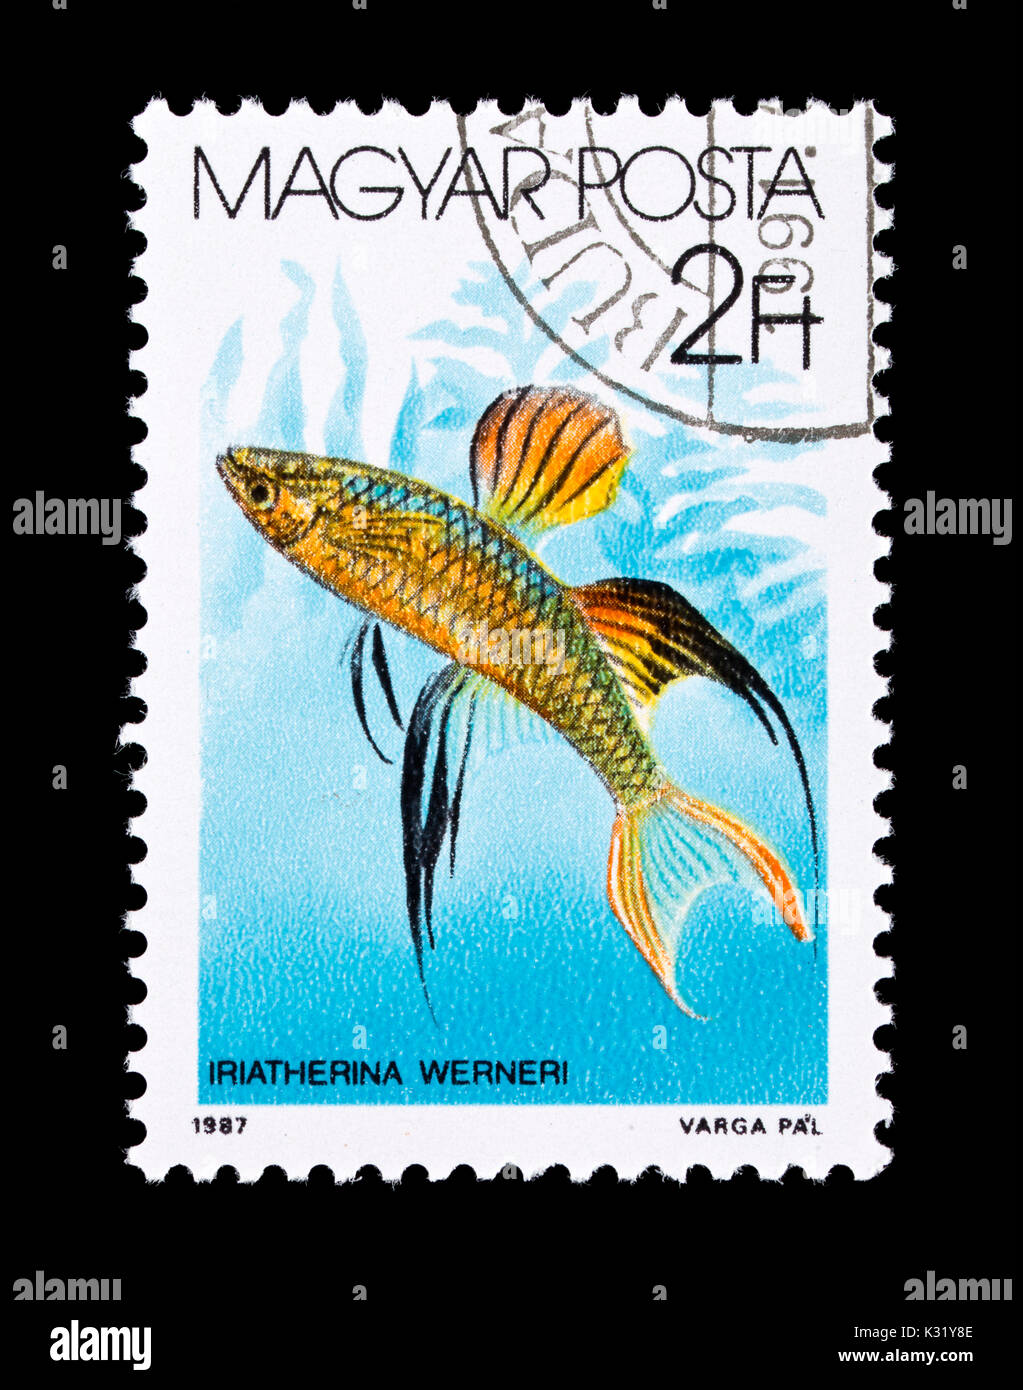 Postage stamp from Hungary depicting threadfin rainbowfish or featherfin rainbowfish (Iriatherina werneri) Stock Photo